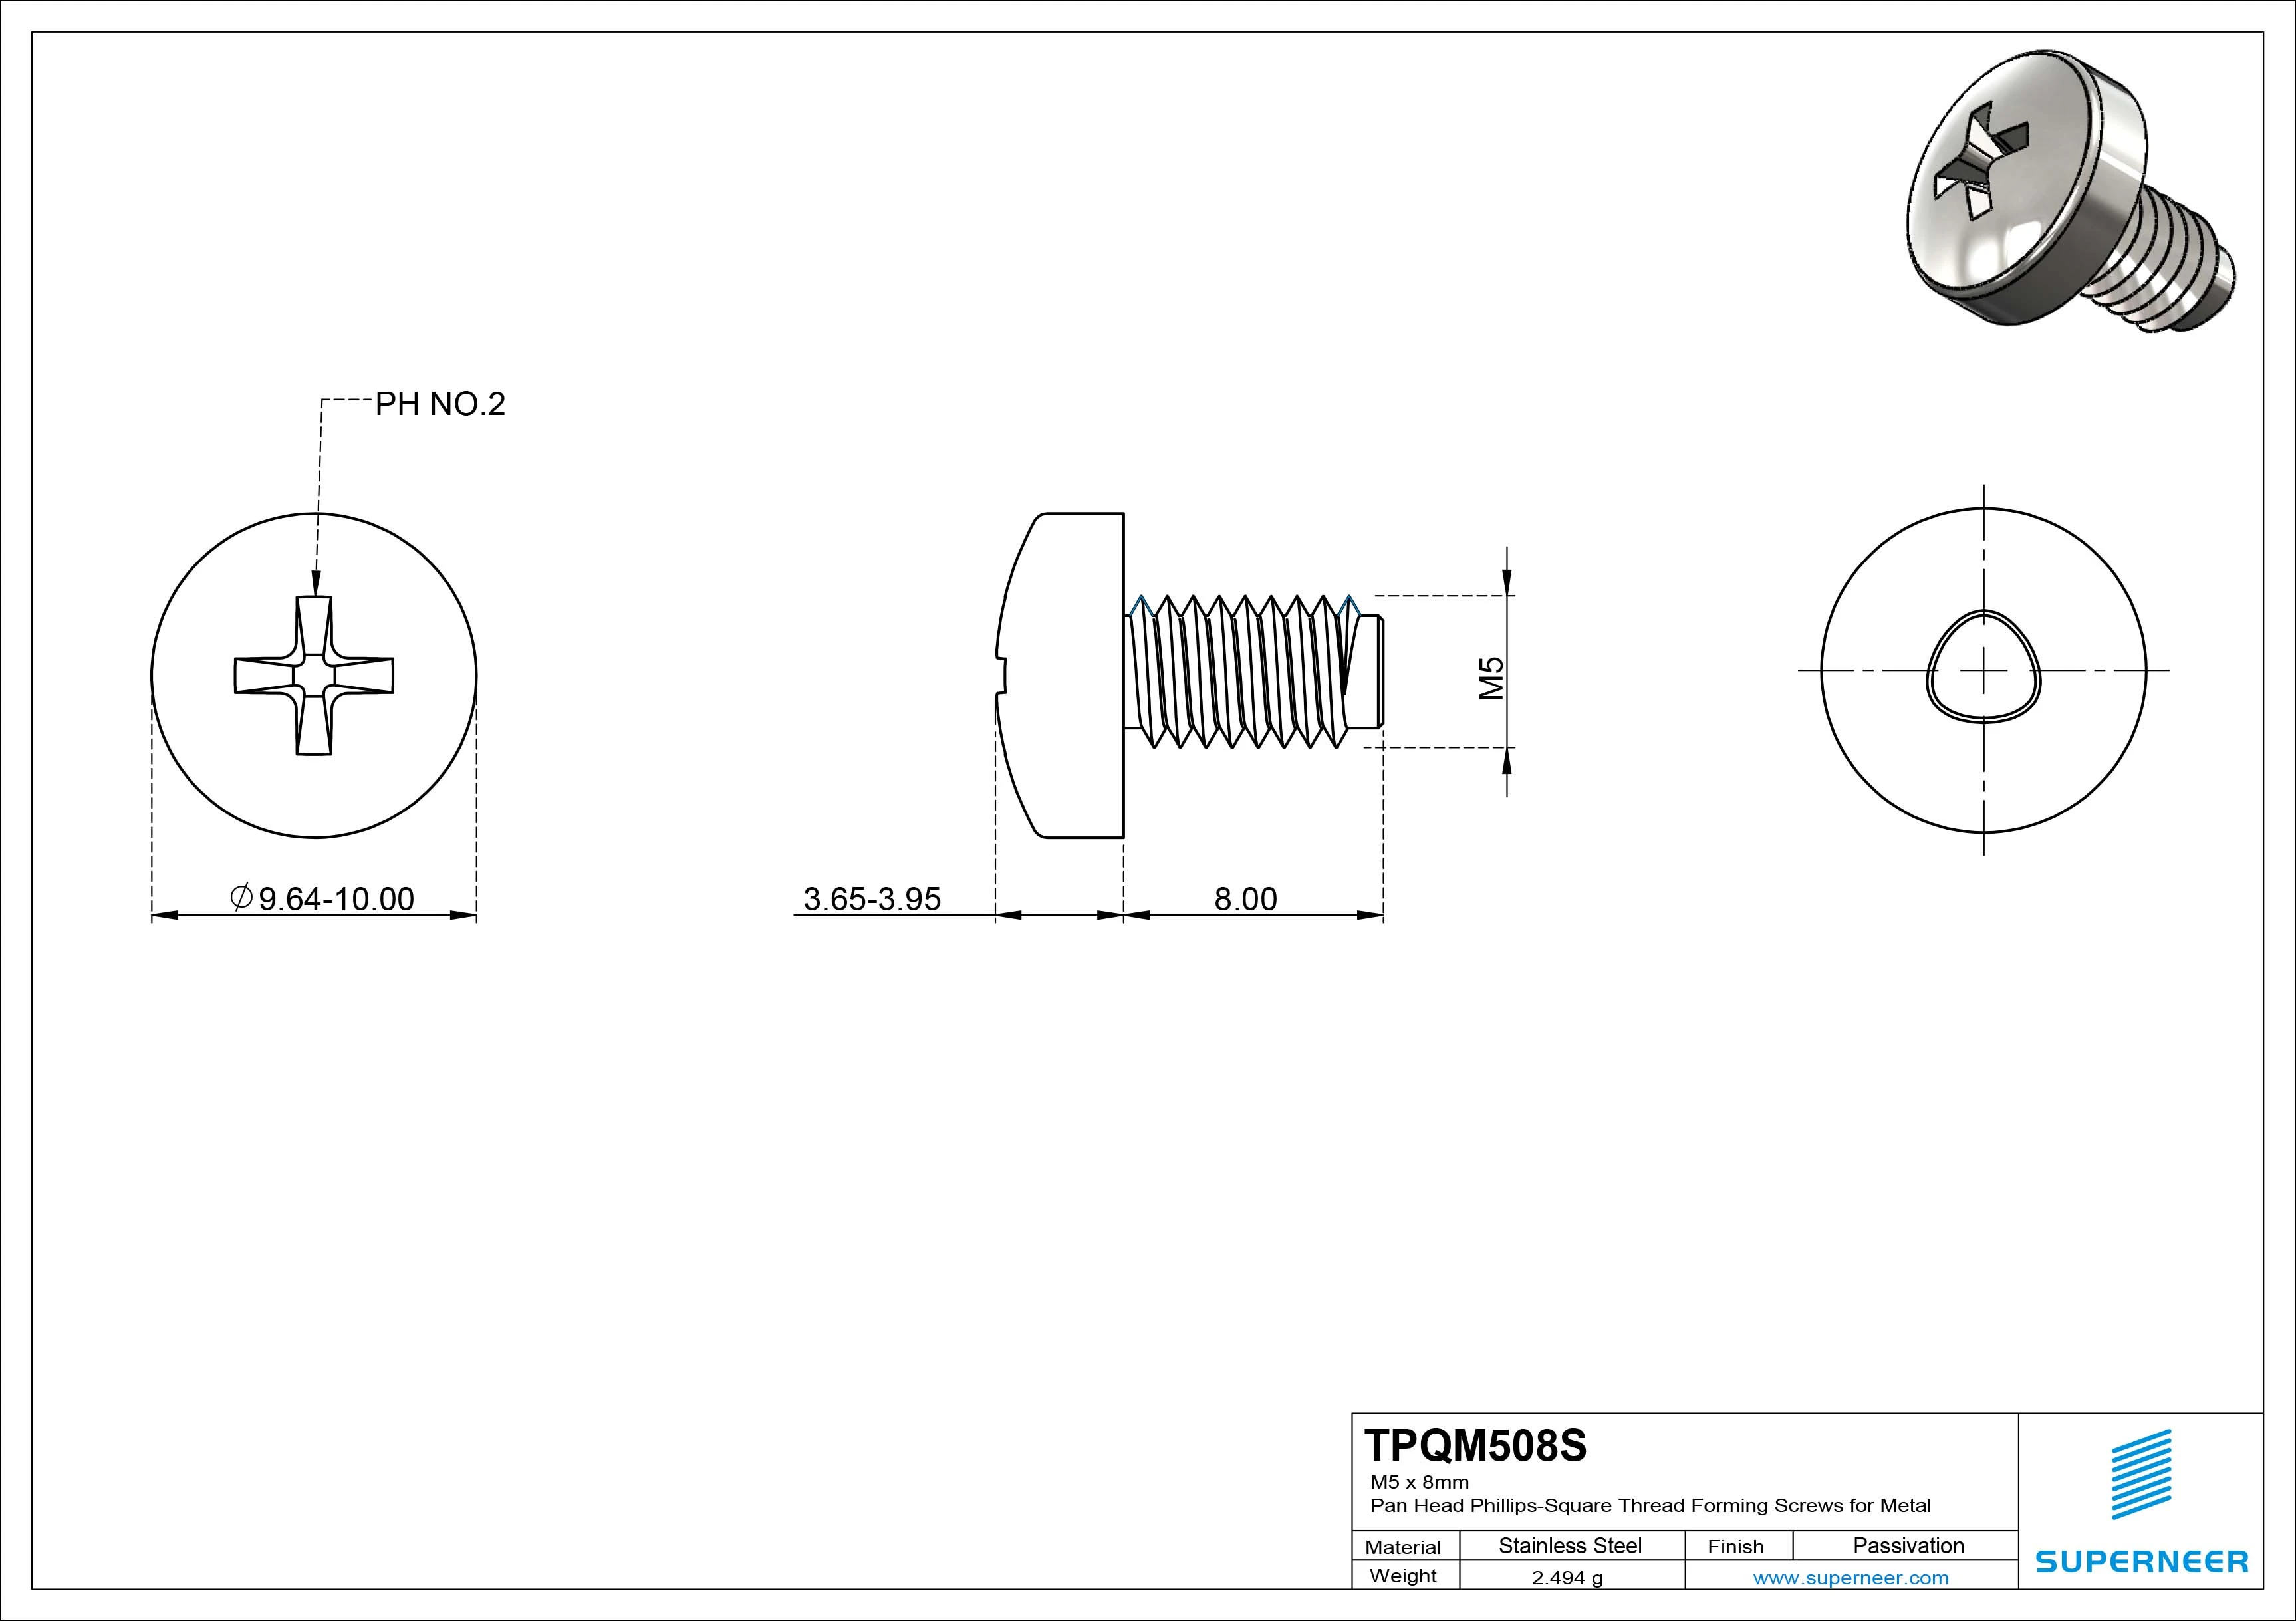 M5 × 8mm Pan Head Phillips-Square Thread Forming Screws for Metal SUS304 Stainless Steel Inox